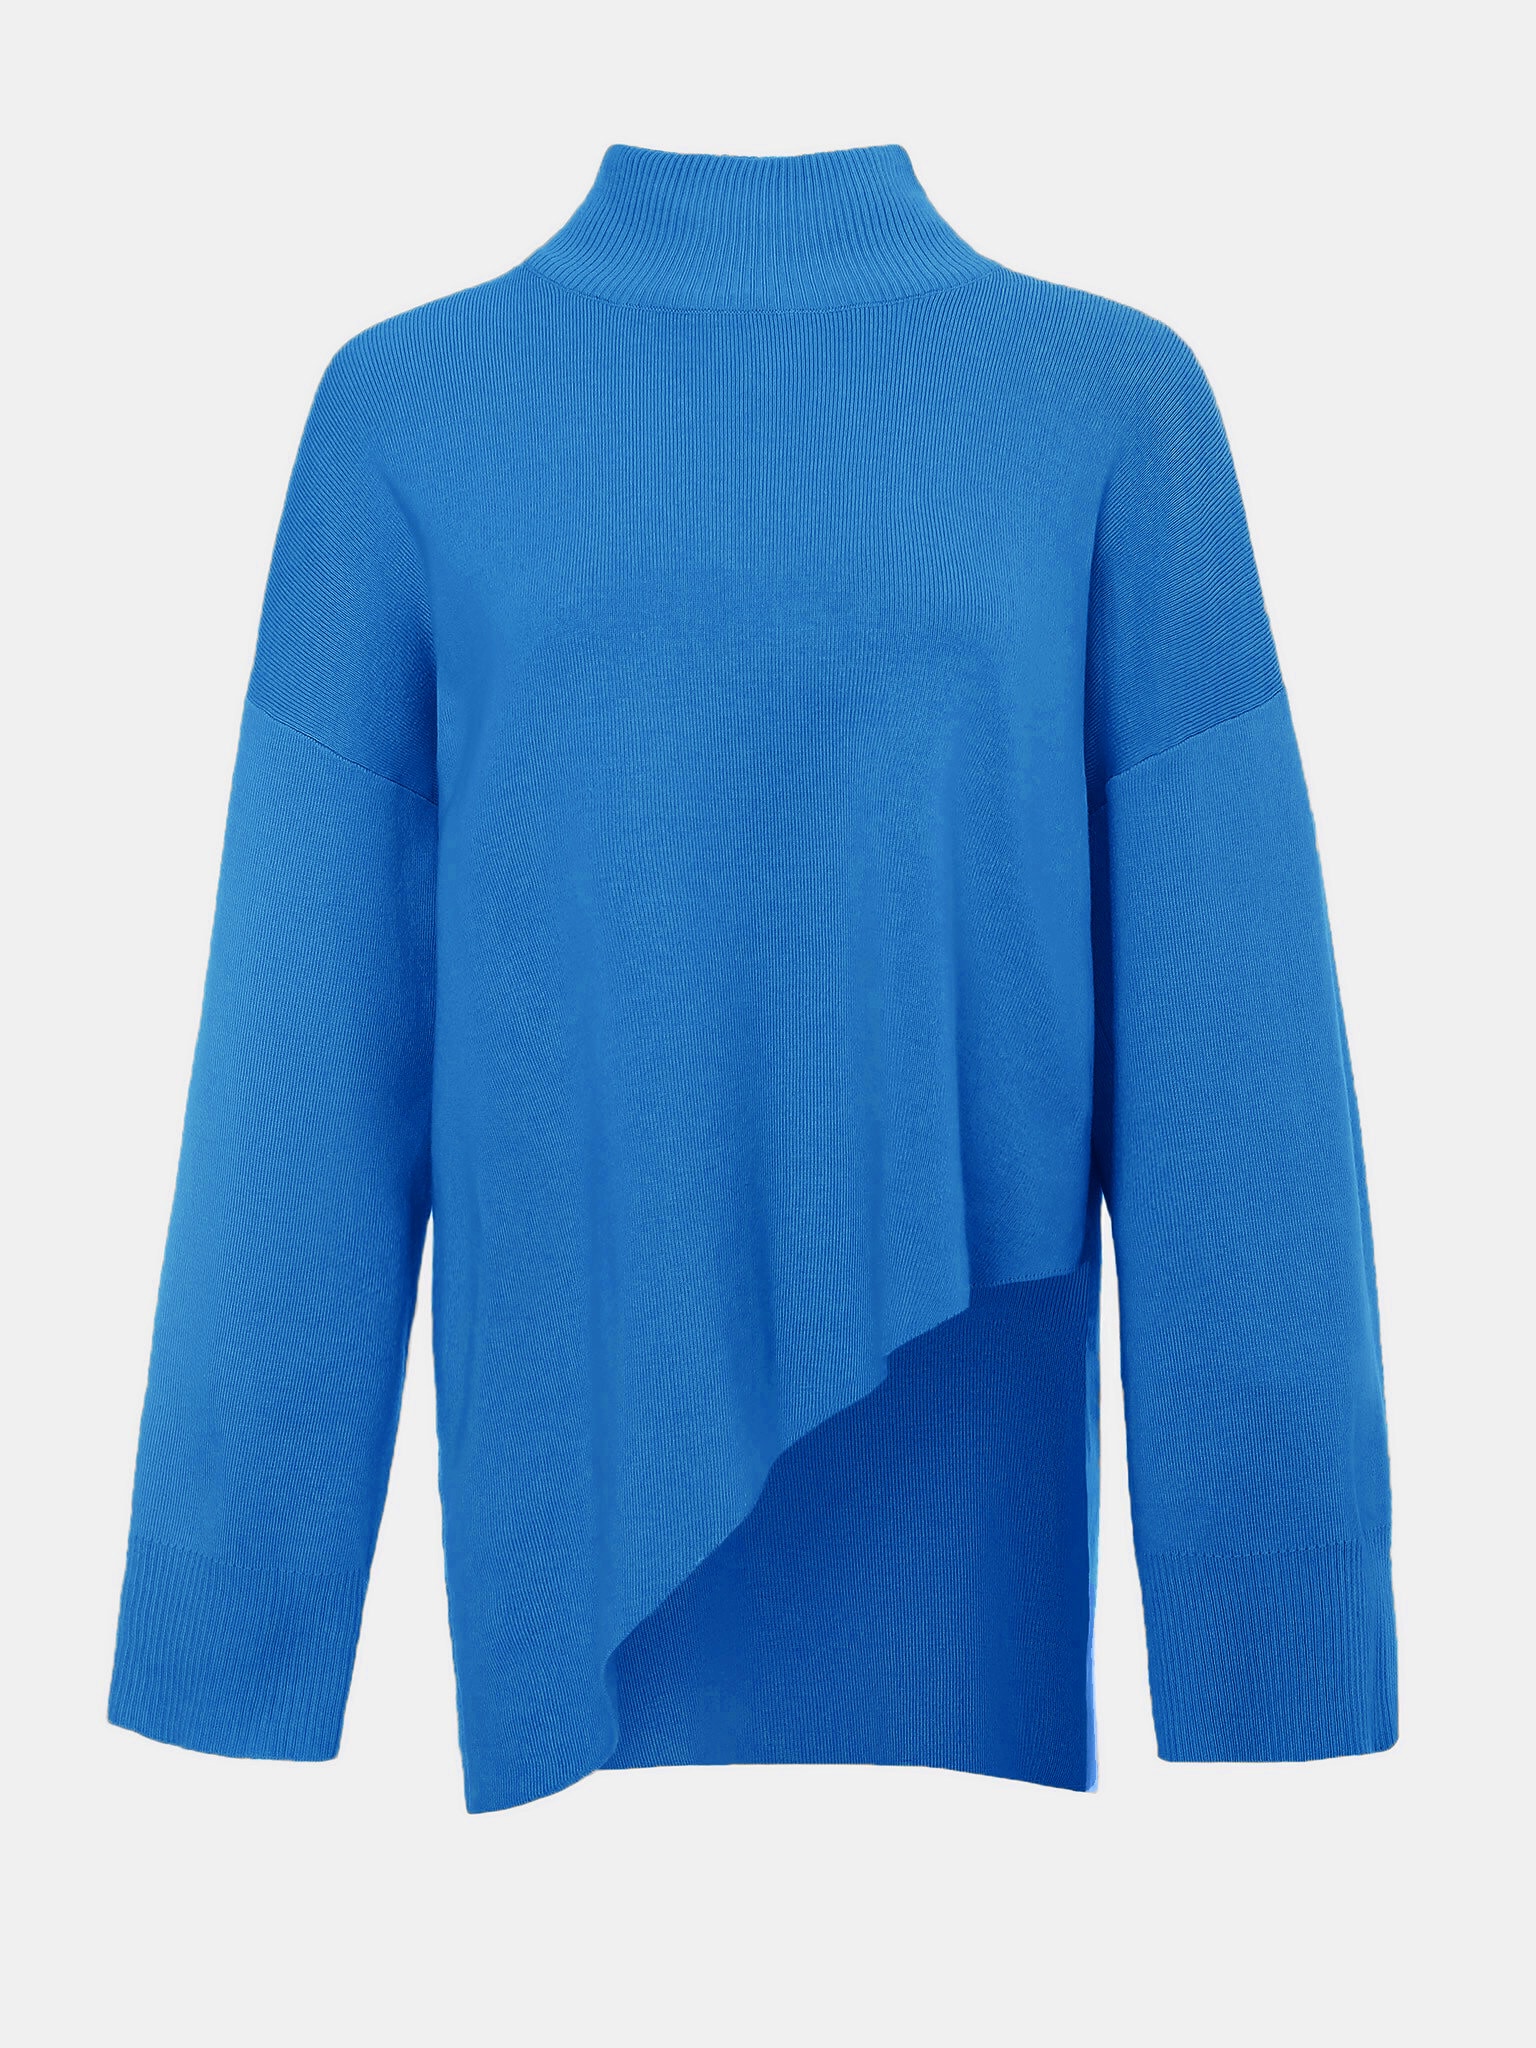 Asymmetric knitted turtleneck sweater :: LICHI - Online fashion store